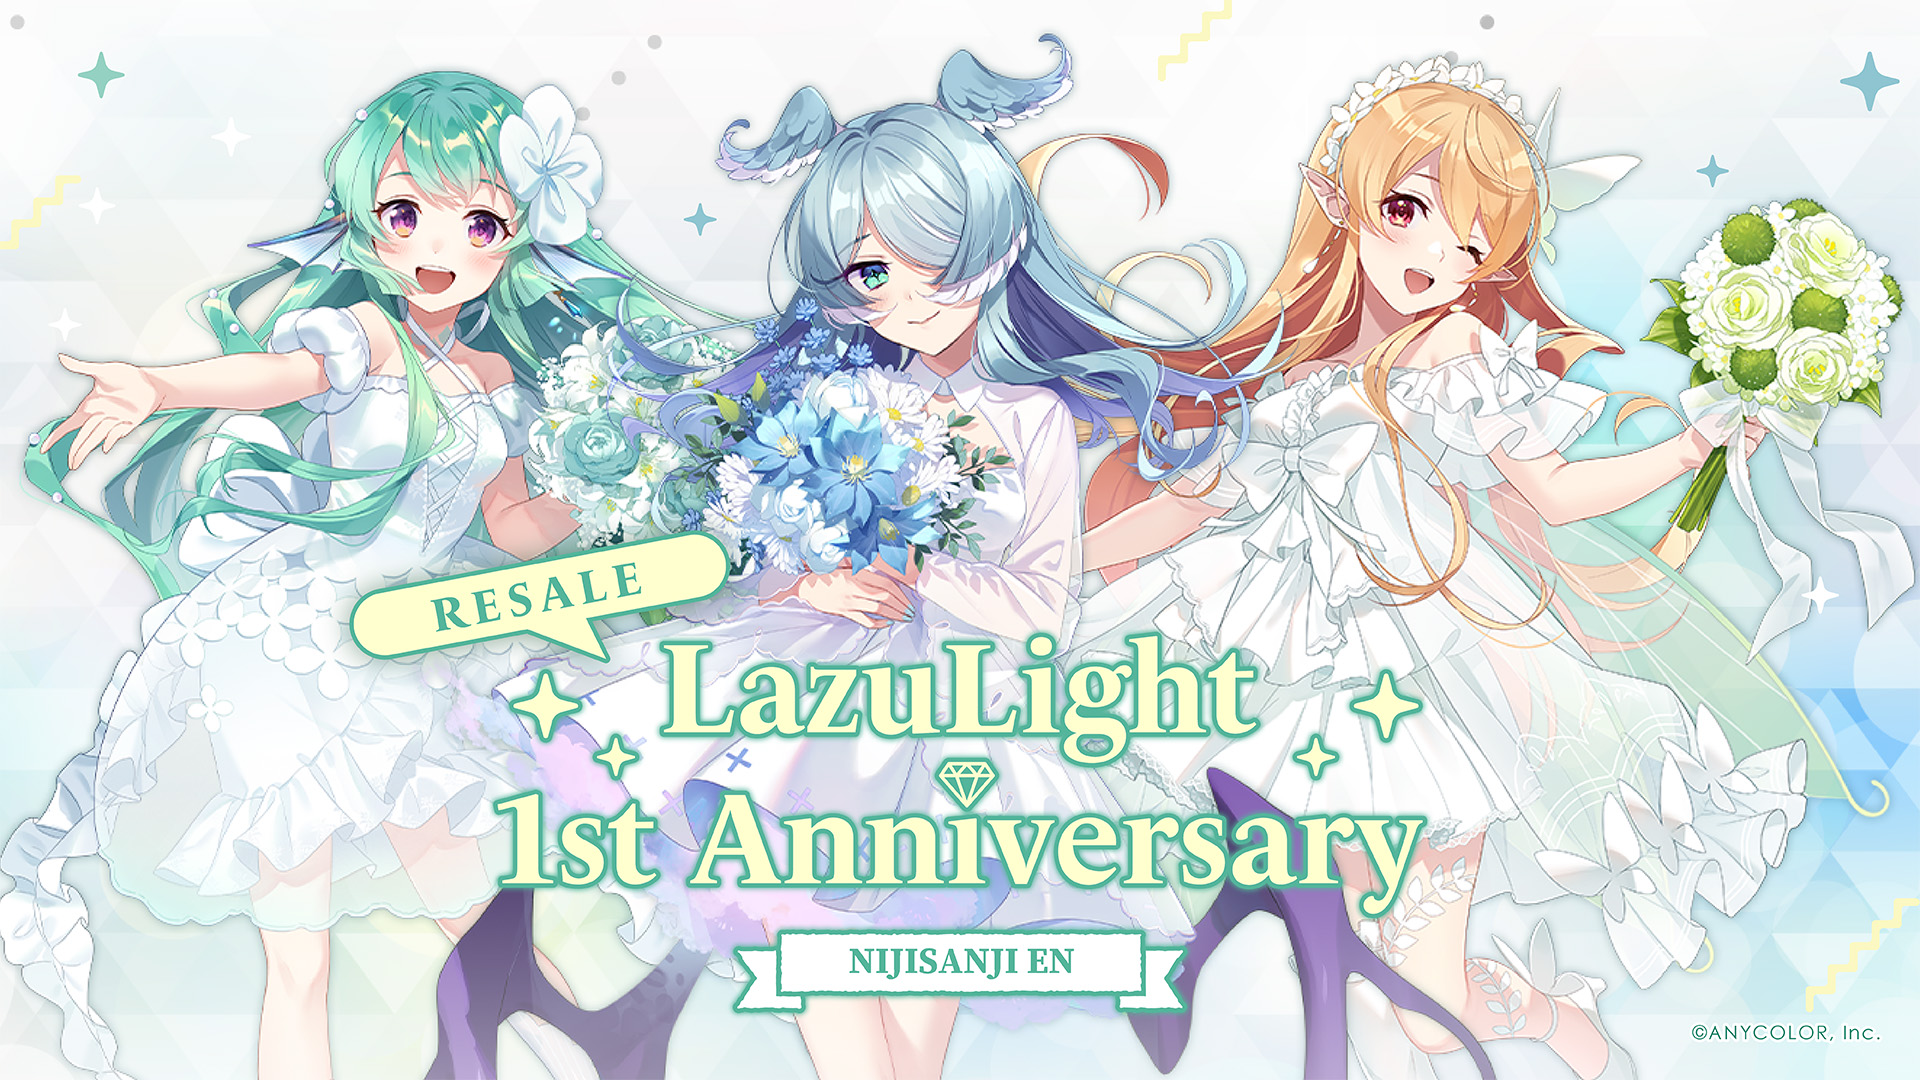 NIJISANJI EN announces “LazuLight 2nd Anniversary” merchandise 